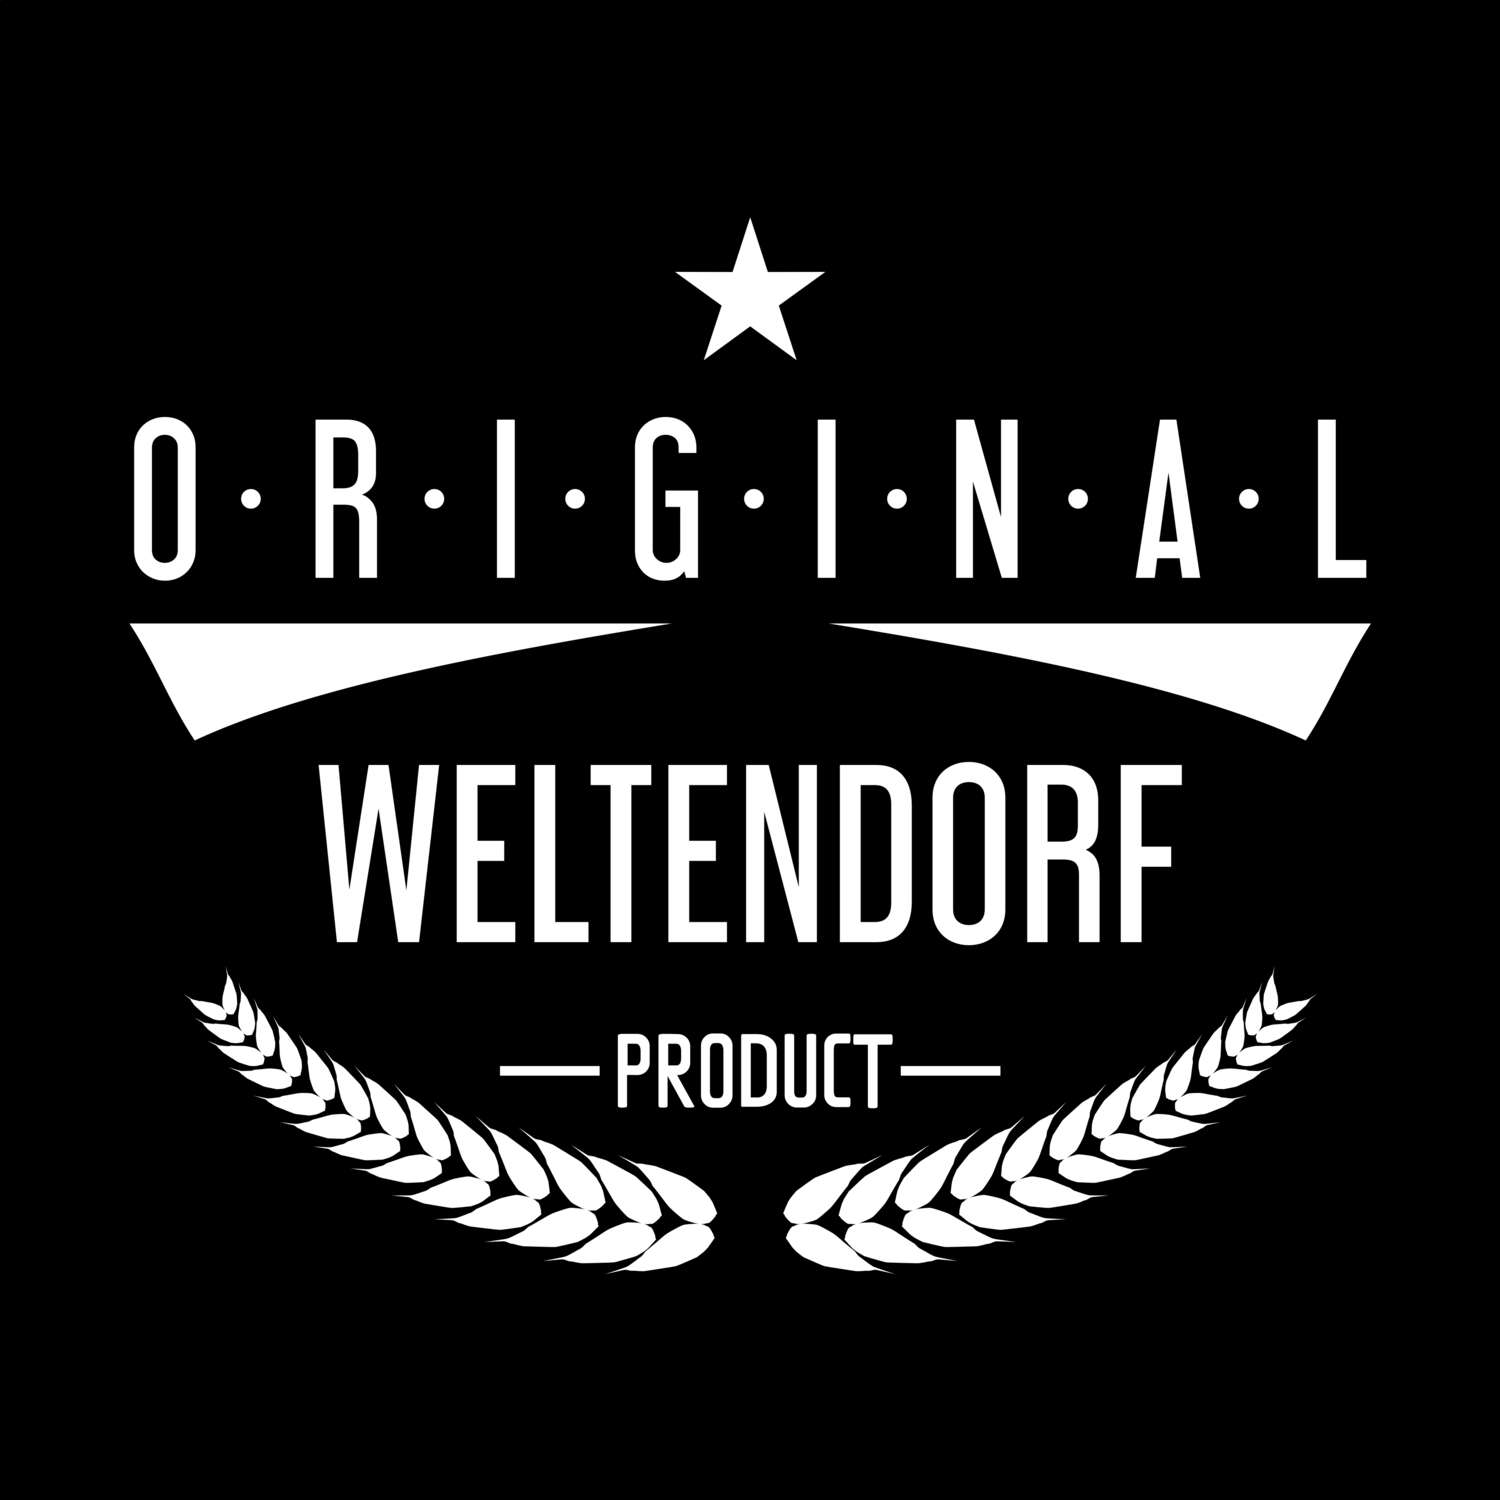 Weltendorf T-Shirt »Original Product«